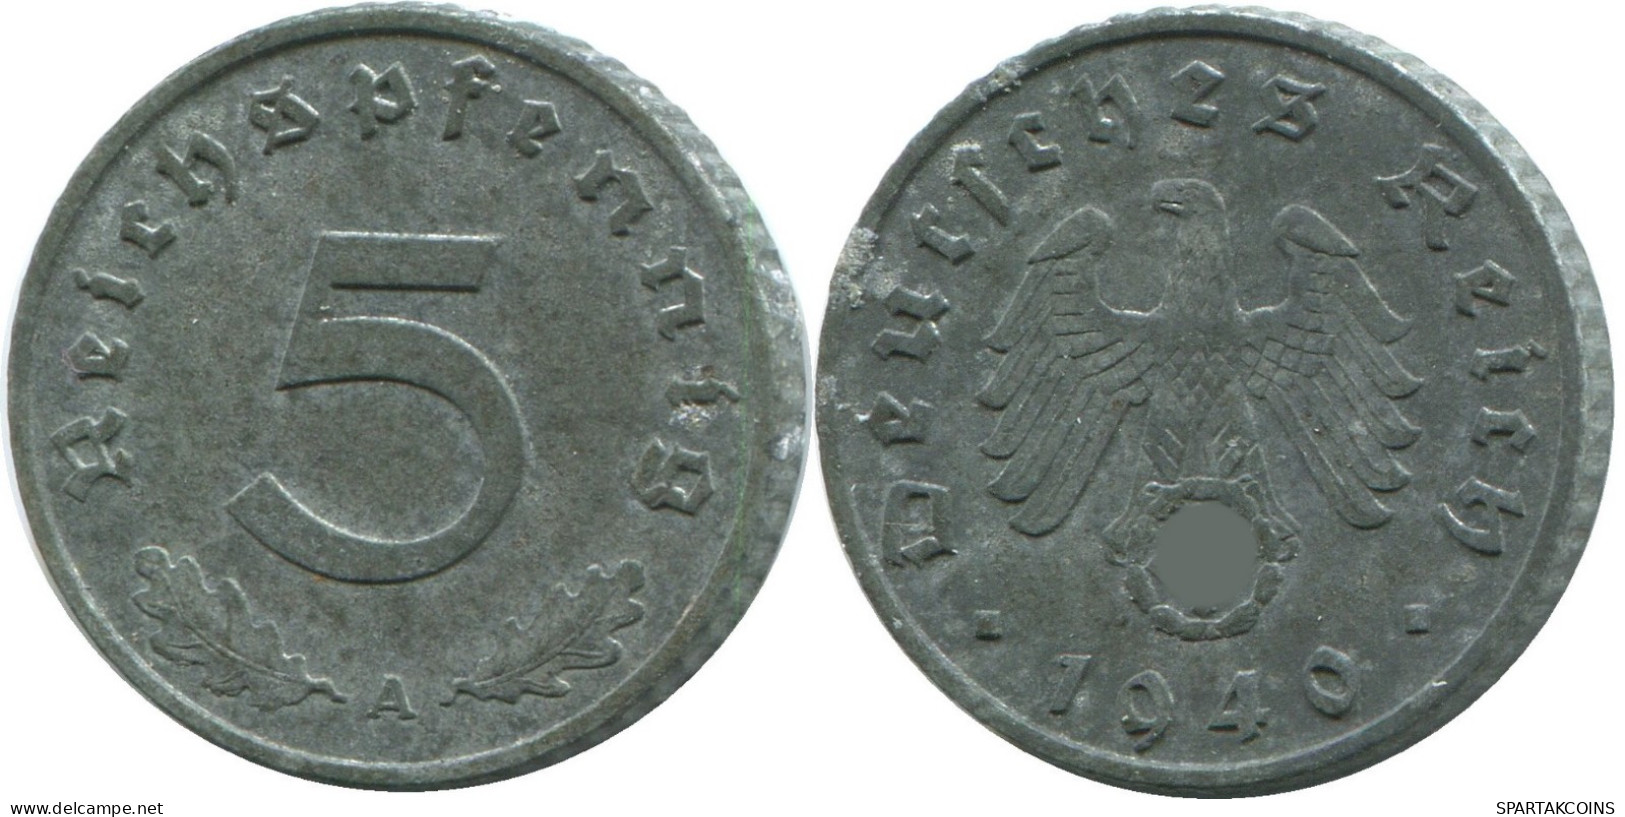 5 REICHSPFENNIG 1940 A ALEMANIA Moneda GERMANY #DE10429.5.E.A - 5 Reichspfennig